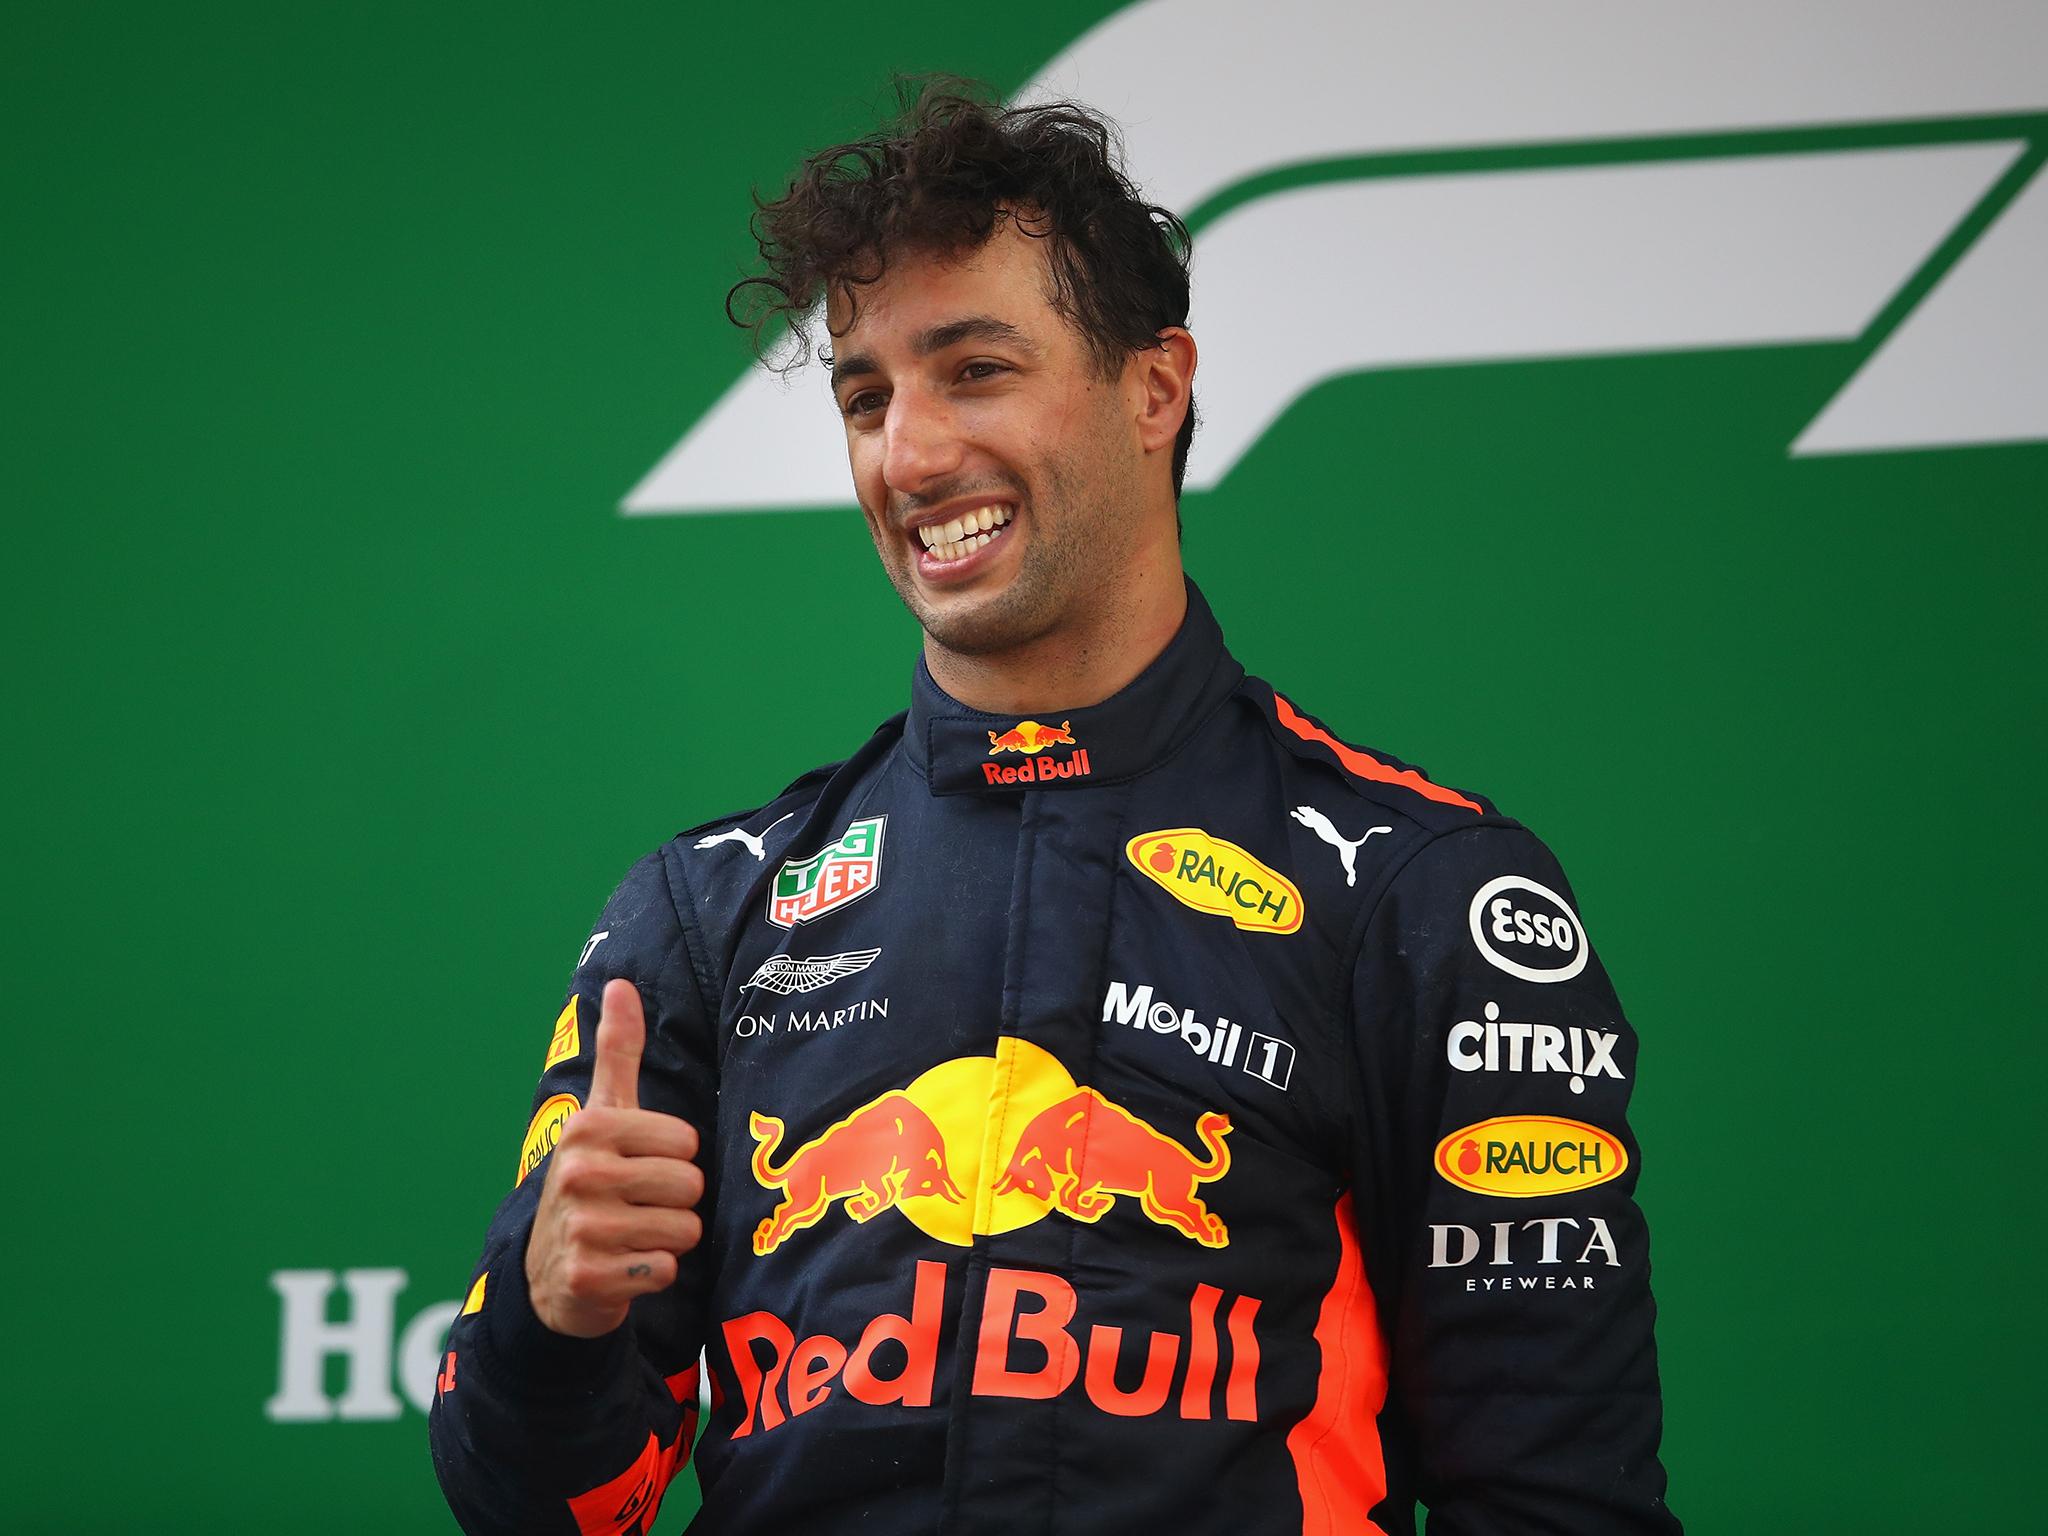 Daniel Ricciardo will hold off committing his future beyond this season